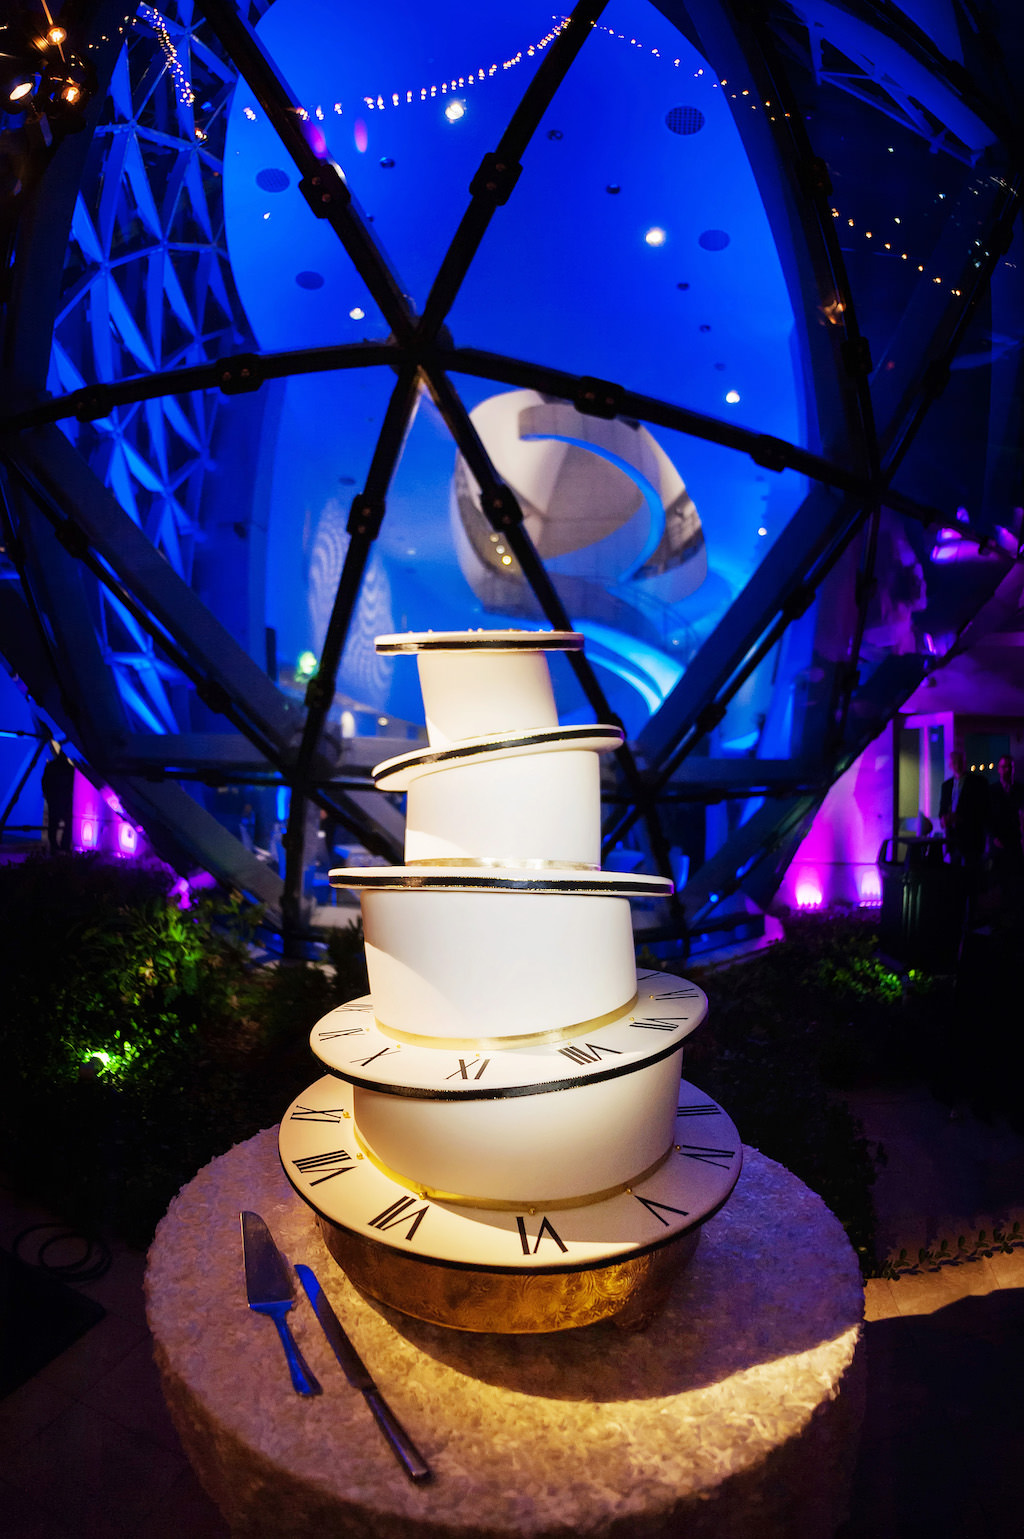 Alice in Wonderland Whimsical Clock 4-Tier White Wedding Cake | Downtown St. Pete Wedding Baker The Artistic Whisk